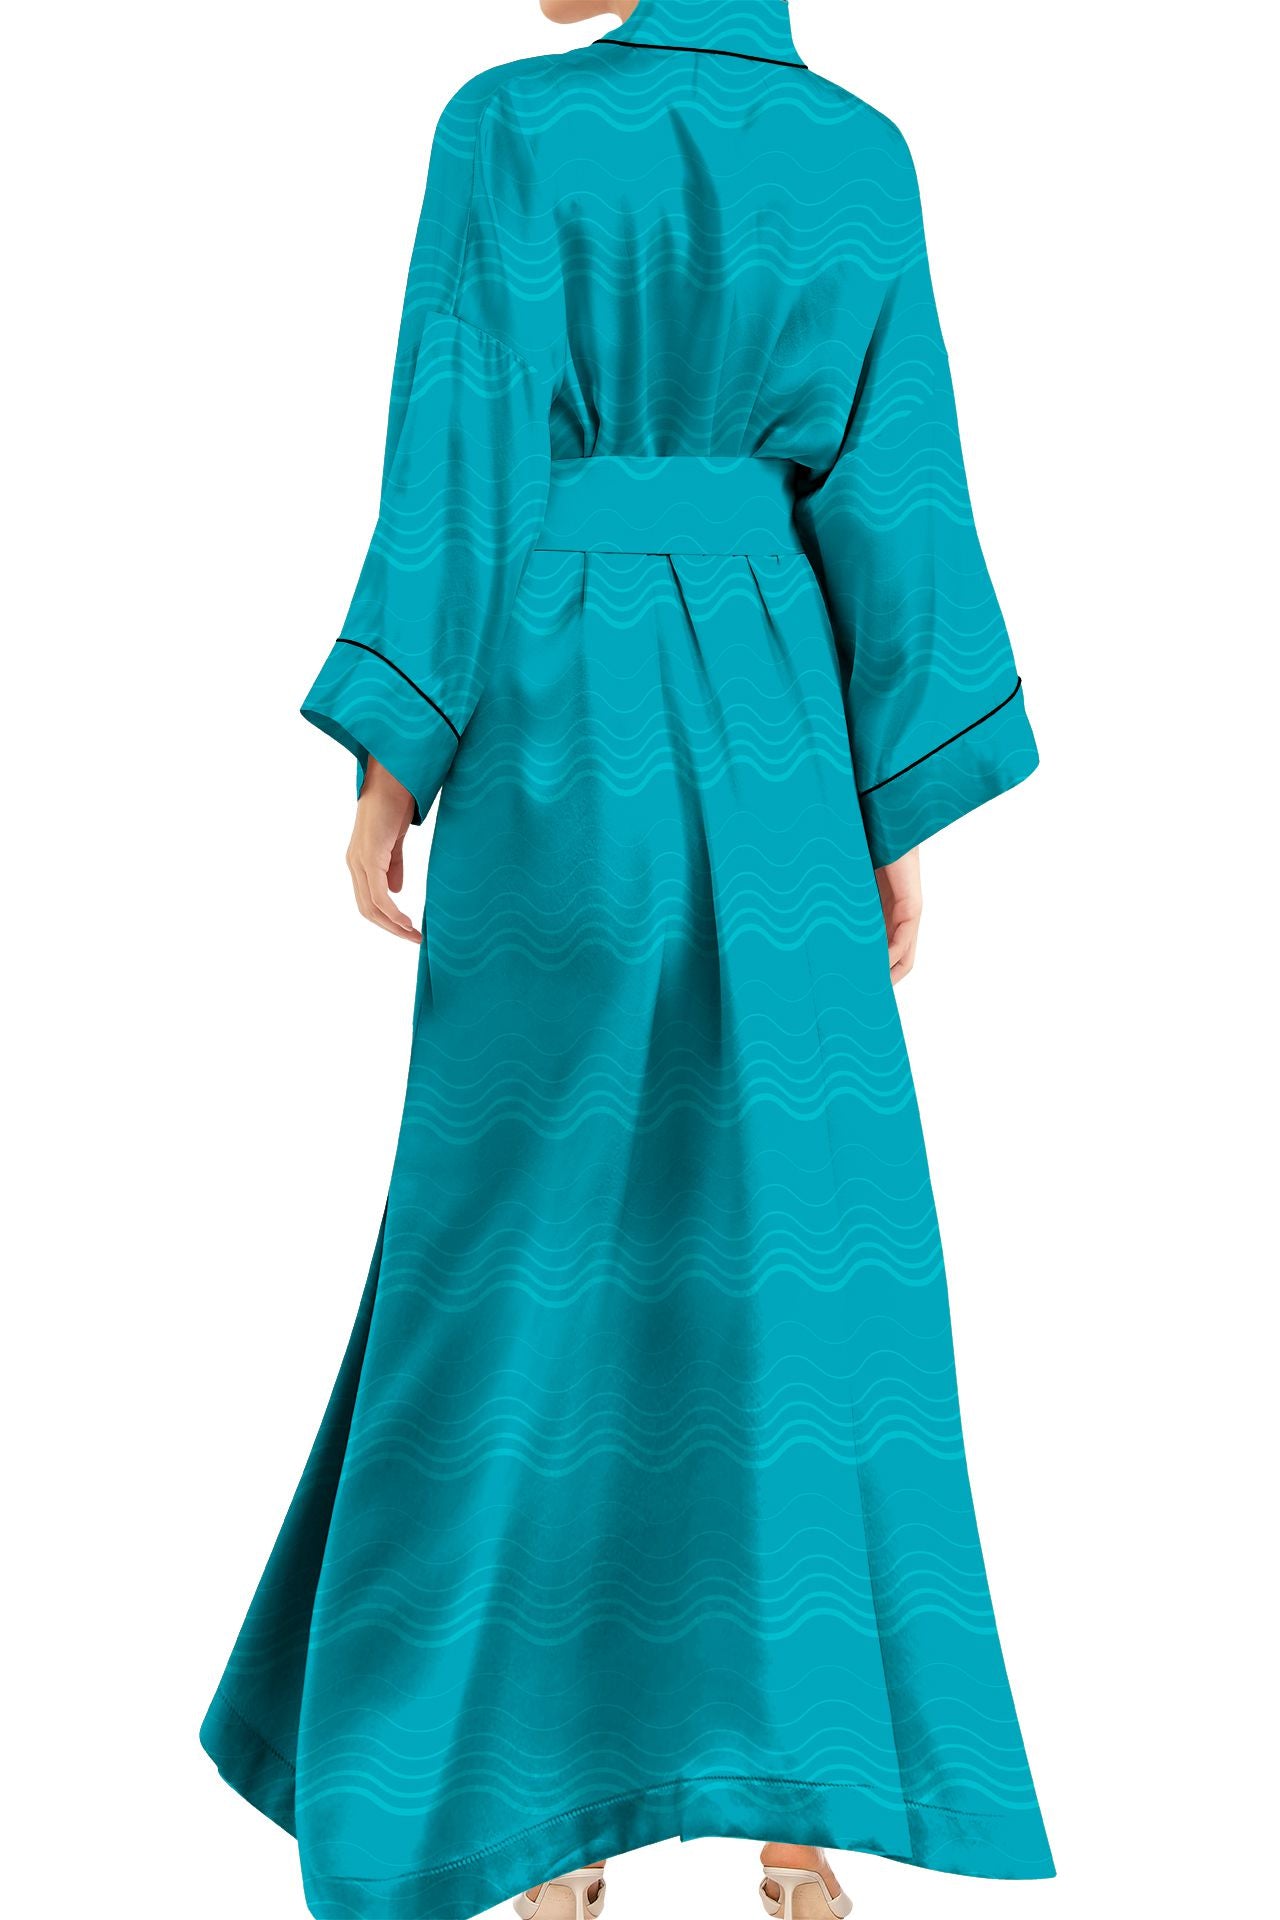 "light blue womens robe" "Kyle X Shahida" "robe silk kimono" "long silk kimono"